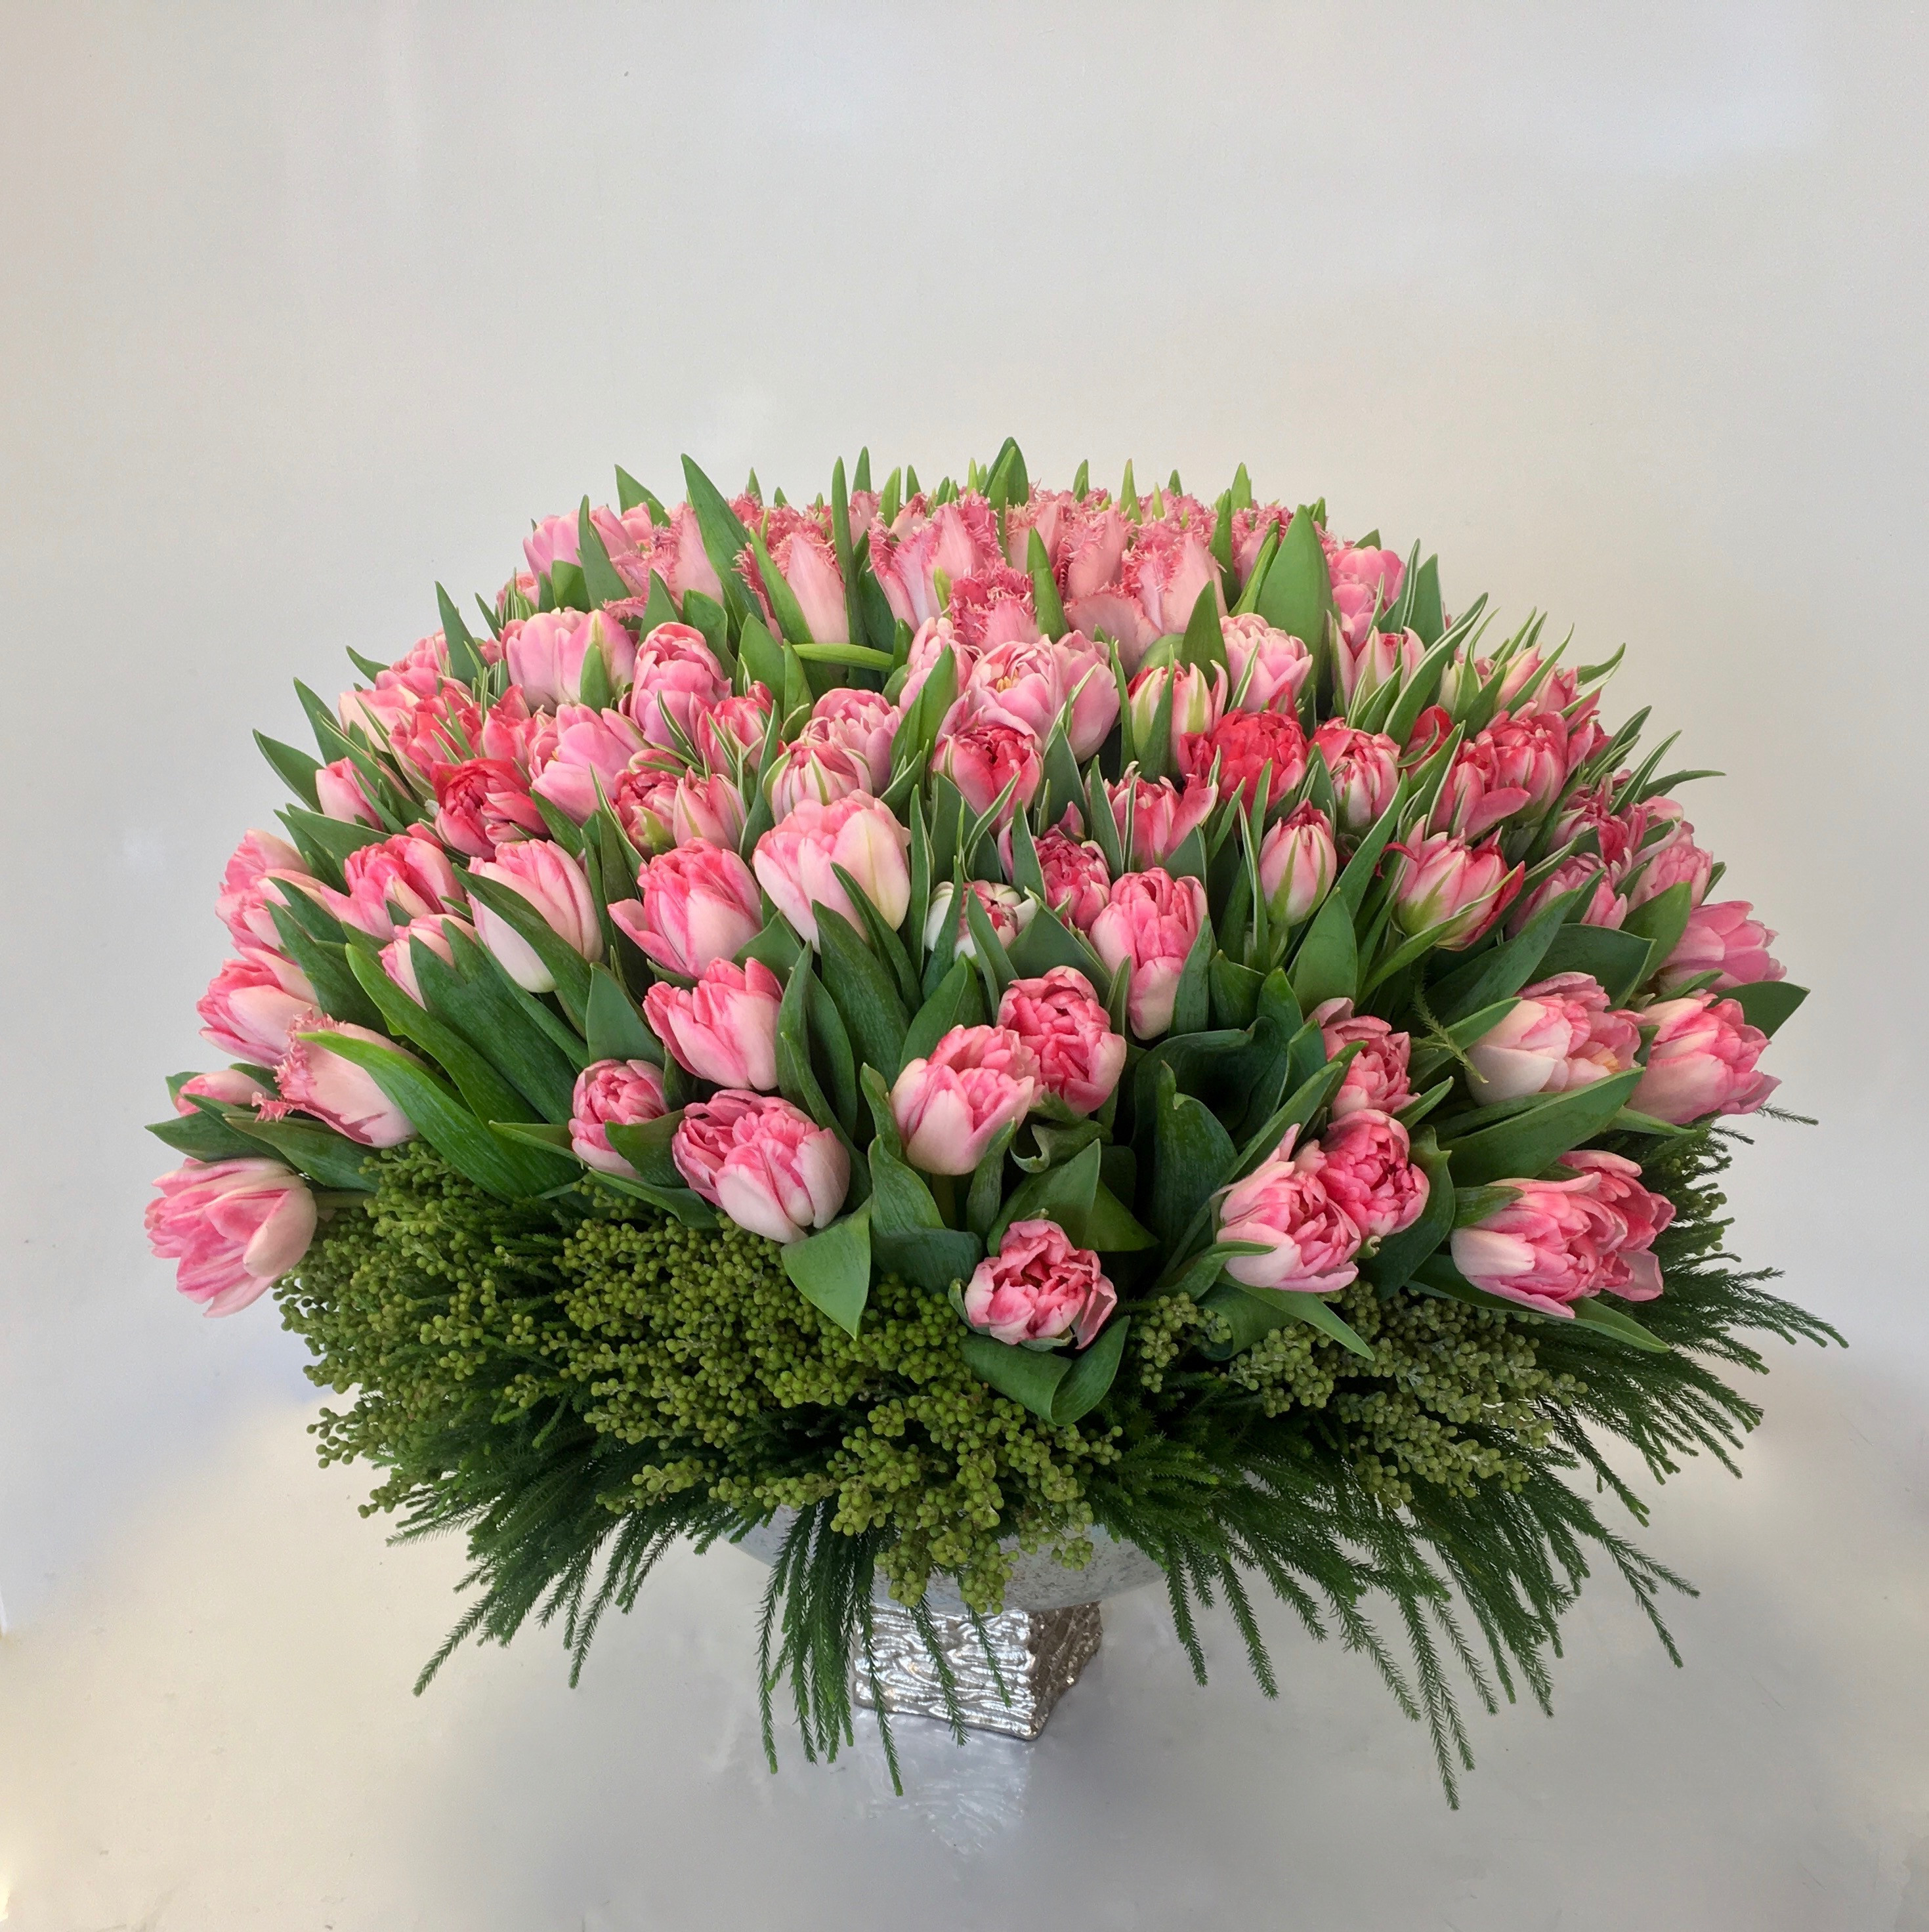 Pink, PInk, Pink Tulips - Glendale Florist in Glendale, CA ...